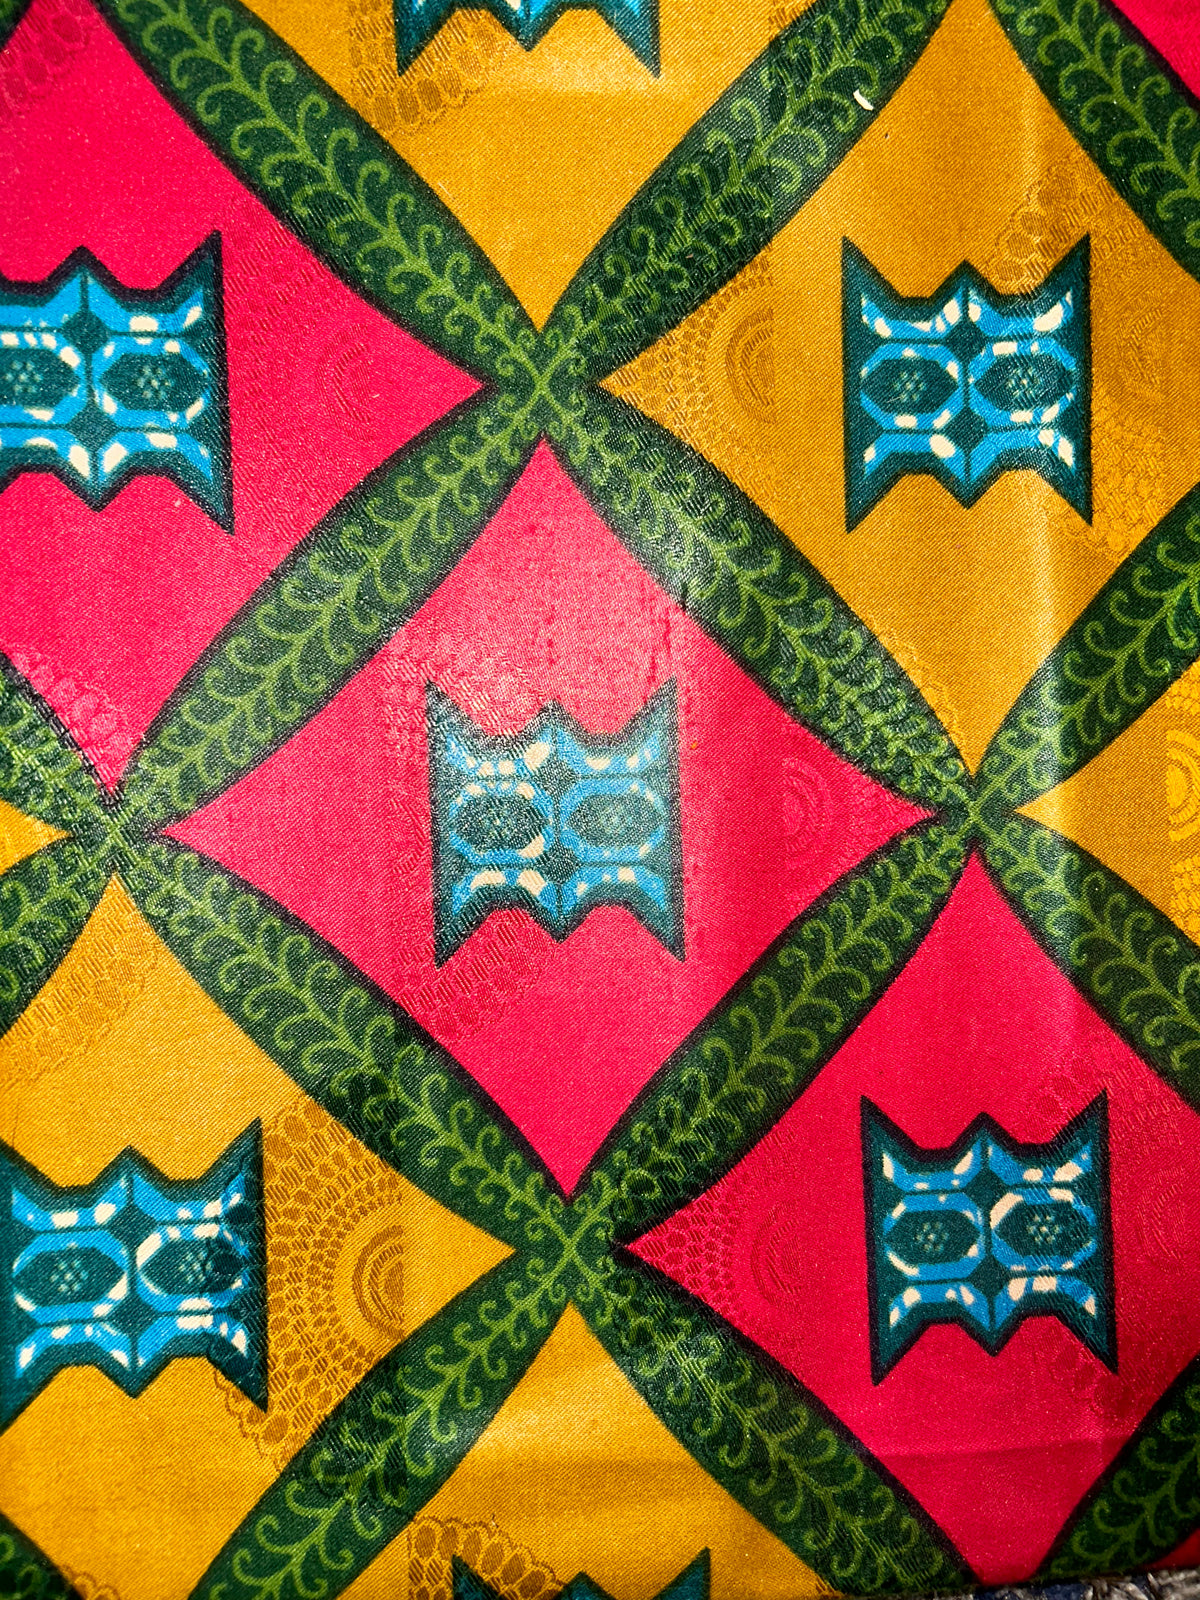 African Fabric -1 Yard Piece